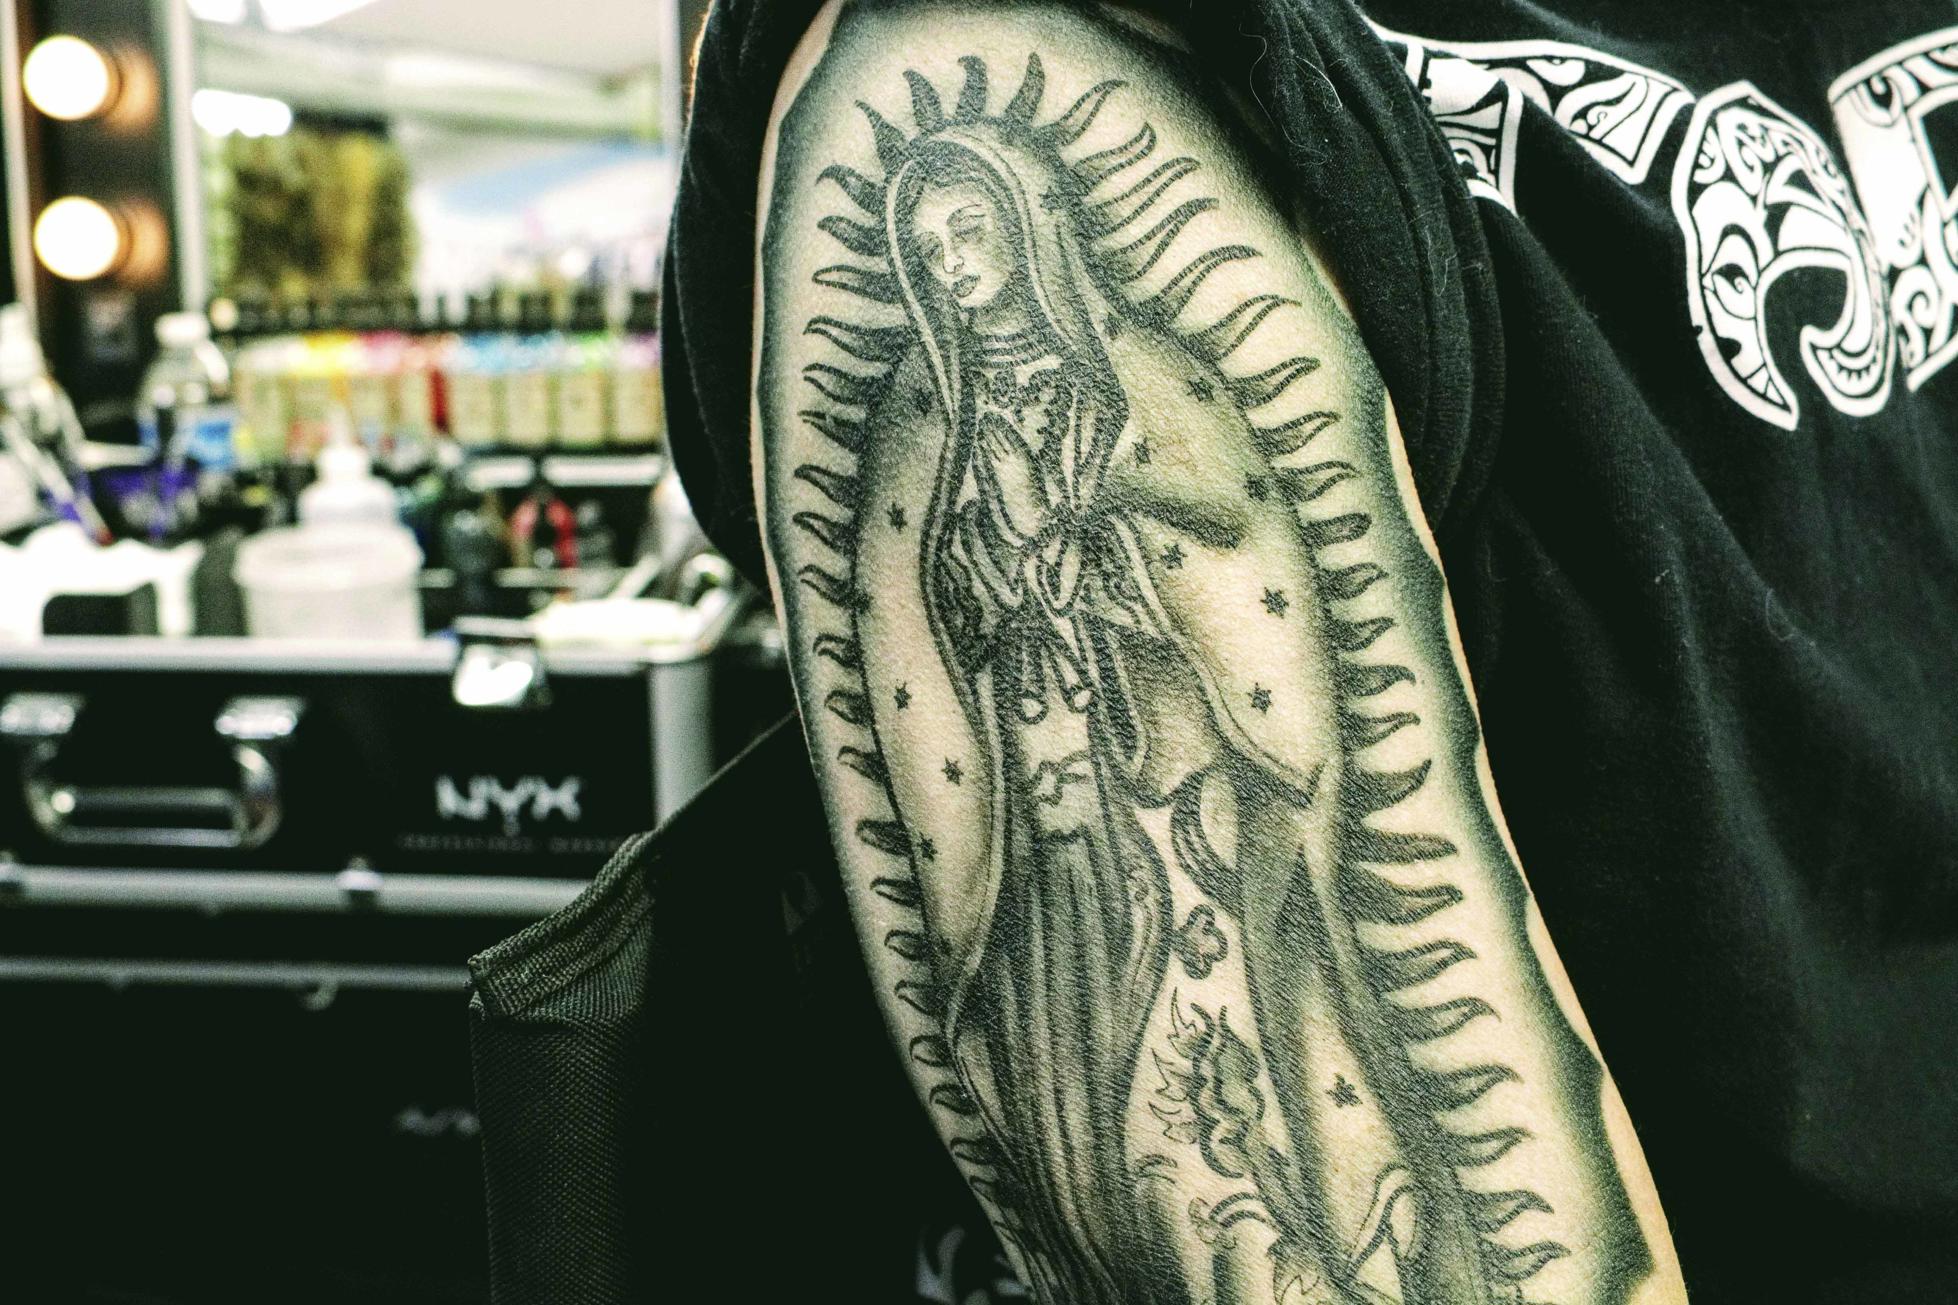 Chicano cover up tattoo by AntoniettaArnoneArts on DeviantArt